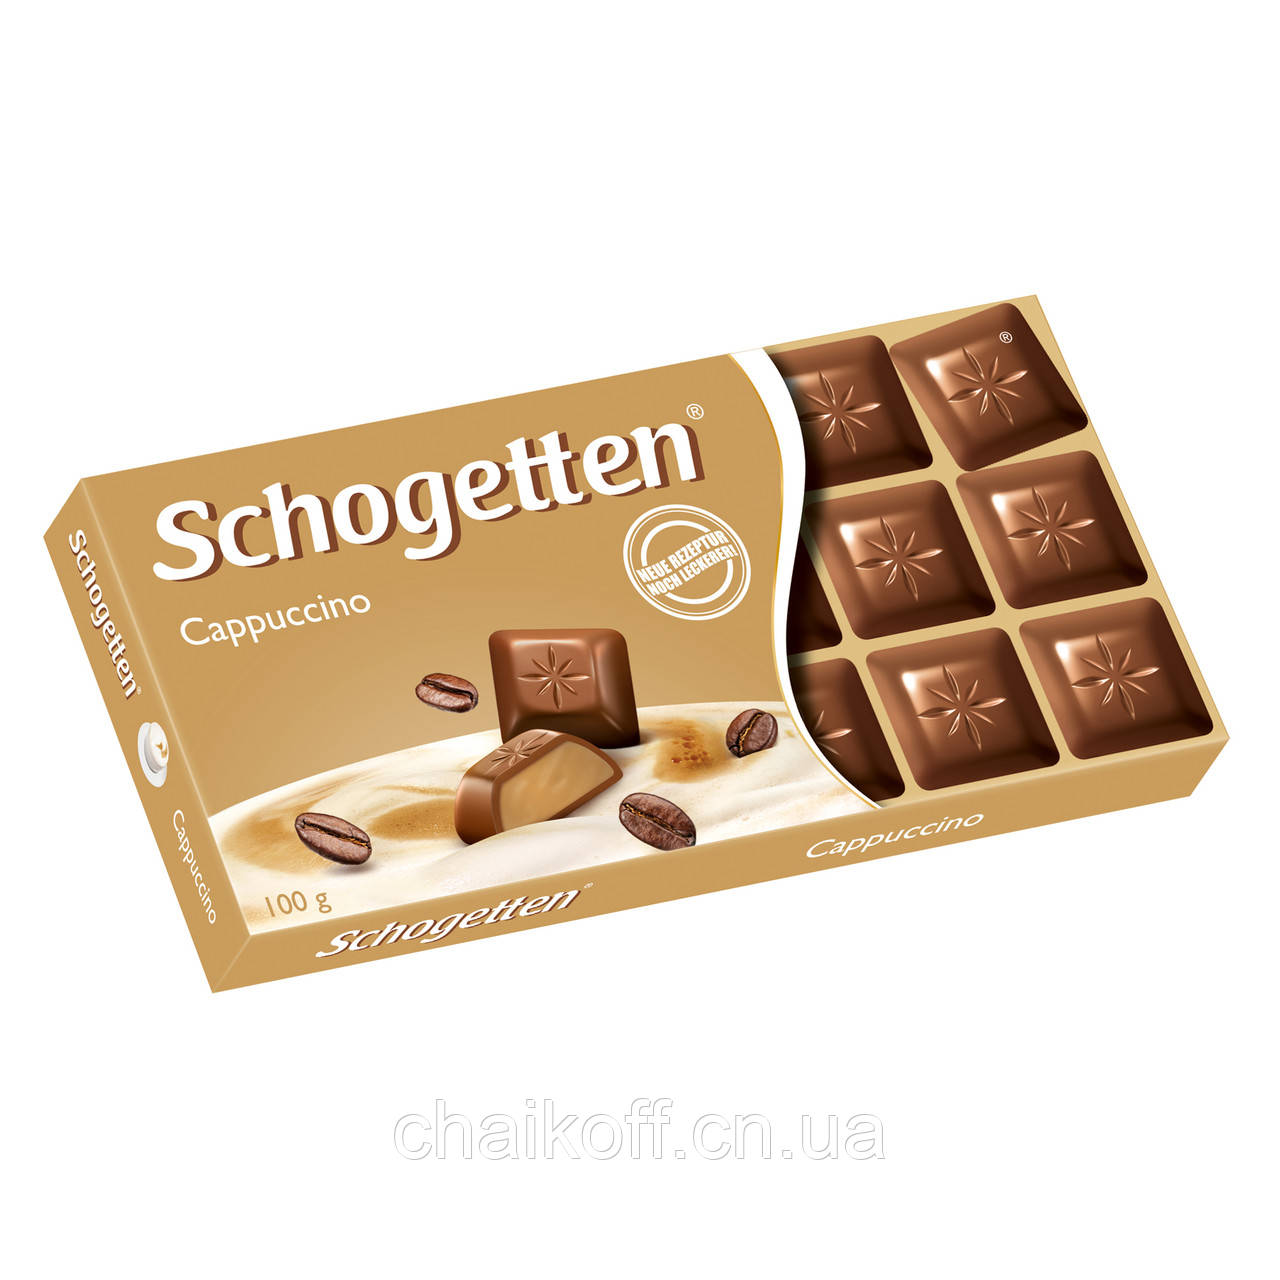 Шоколад Schogetten Cappuccino 100 г (Німеччина)